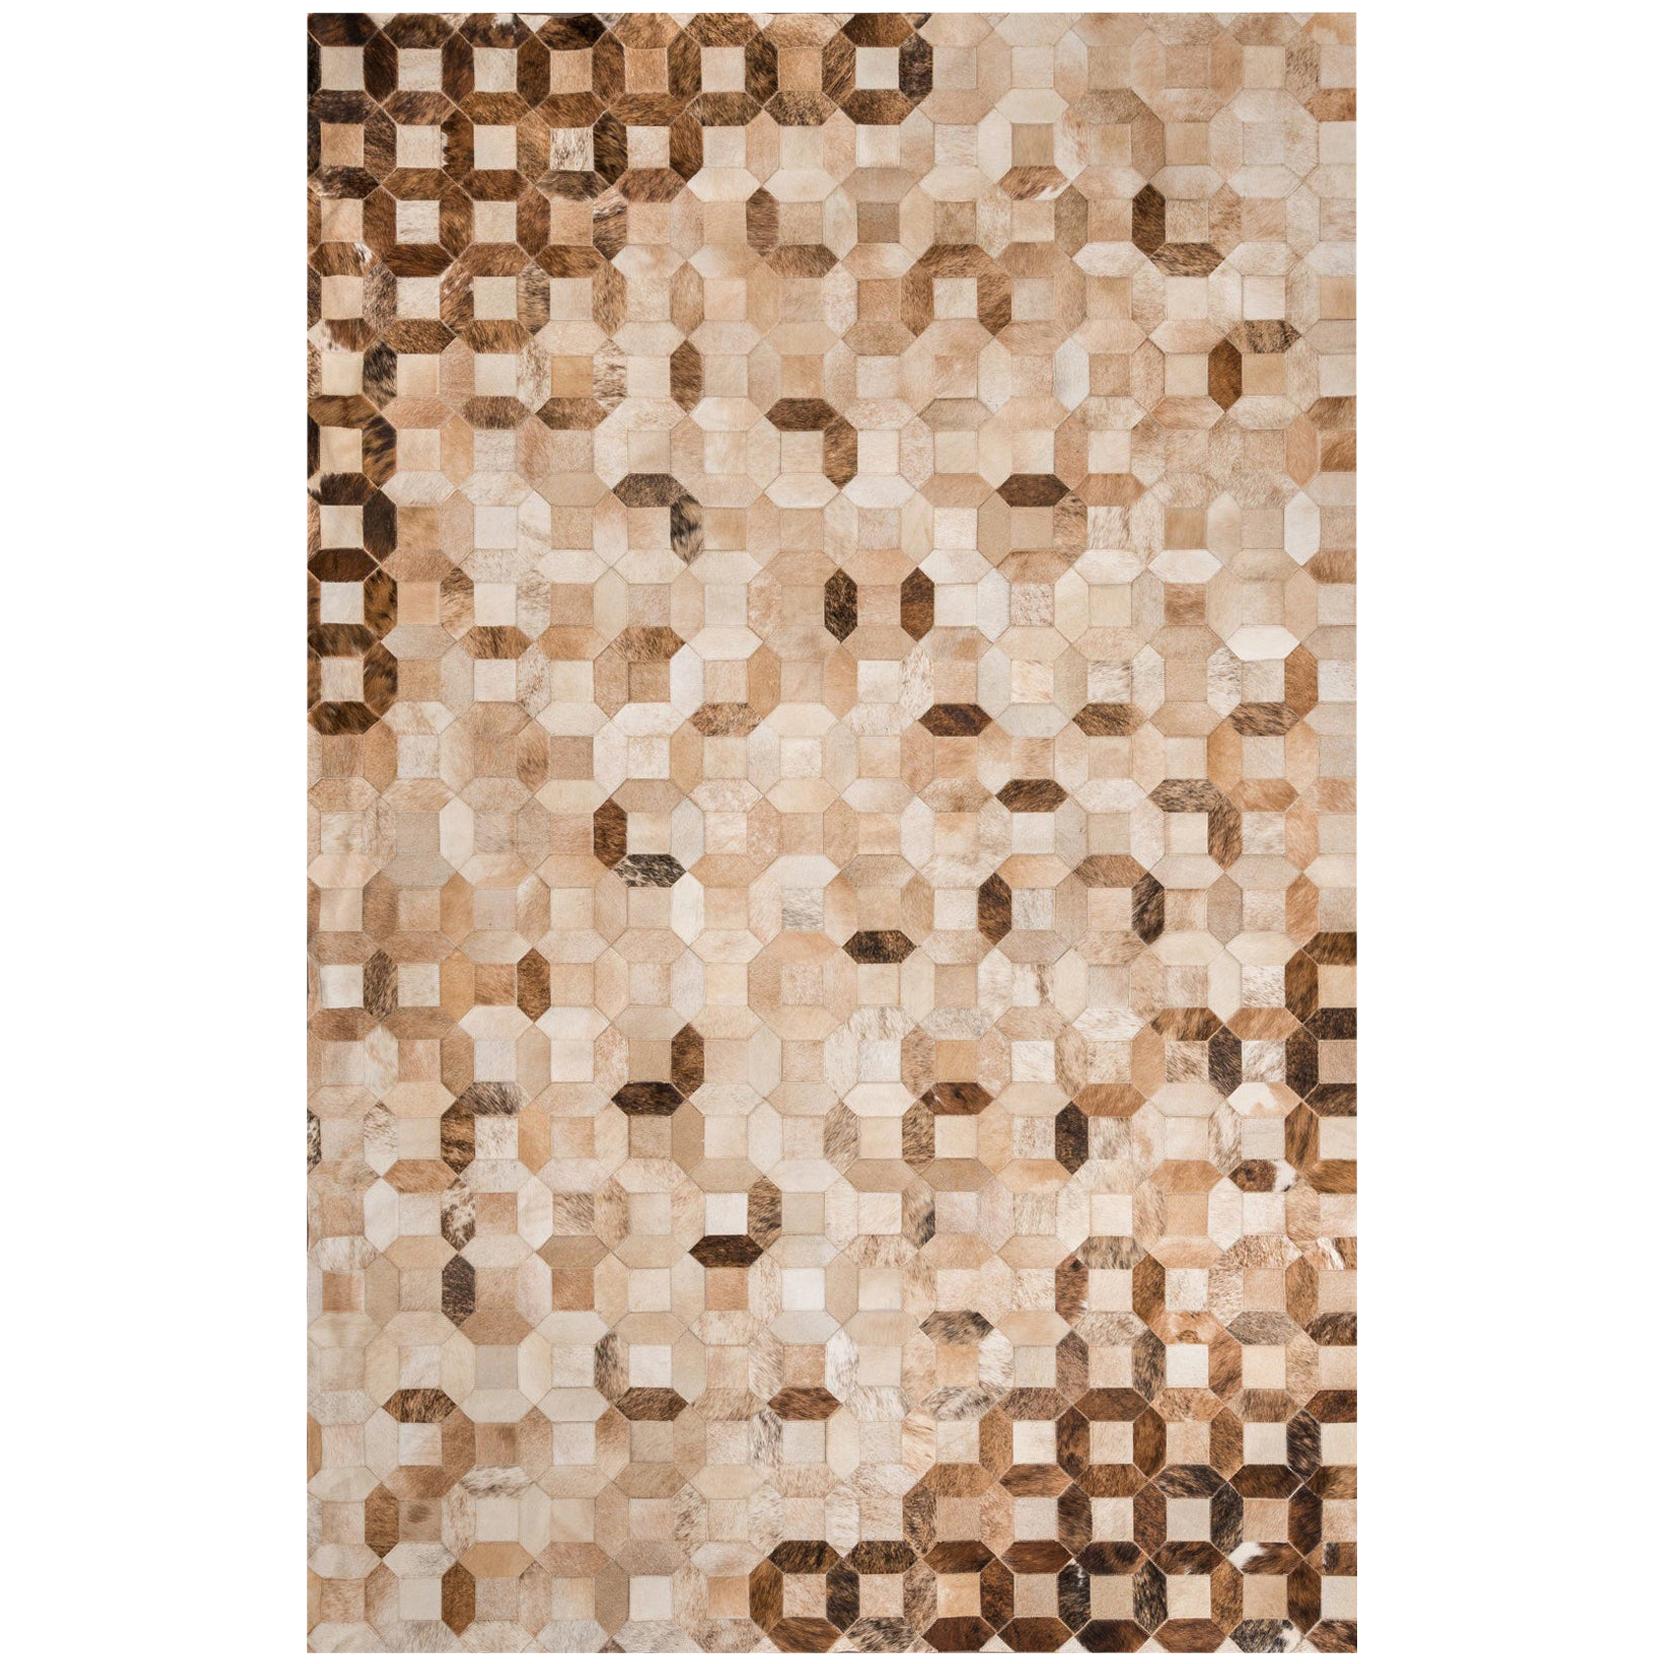 Tan, caramel Tessellation Trellis Cowhide Area Floor Rug X-Large  For Sale